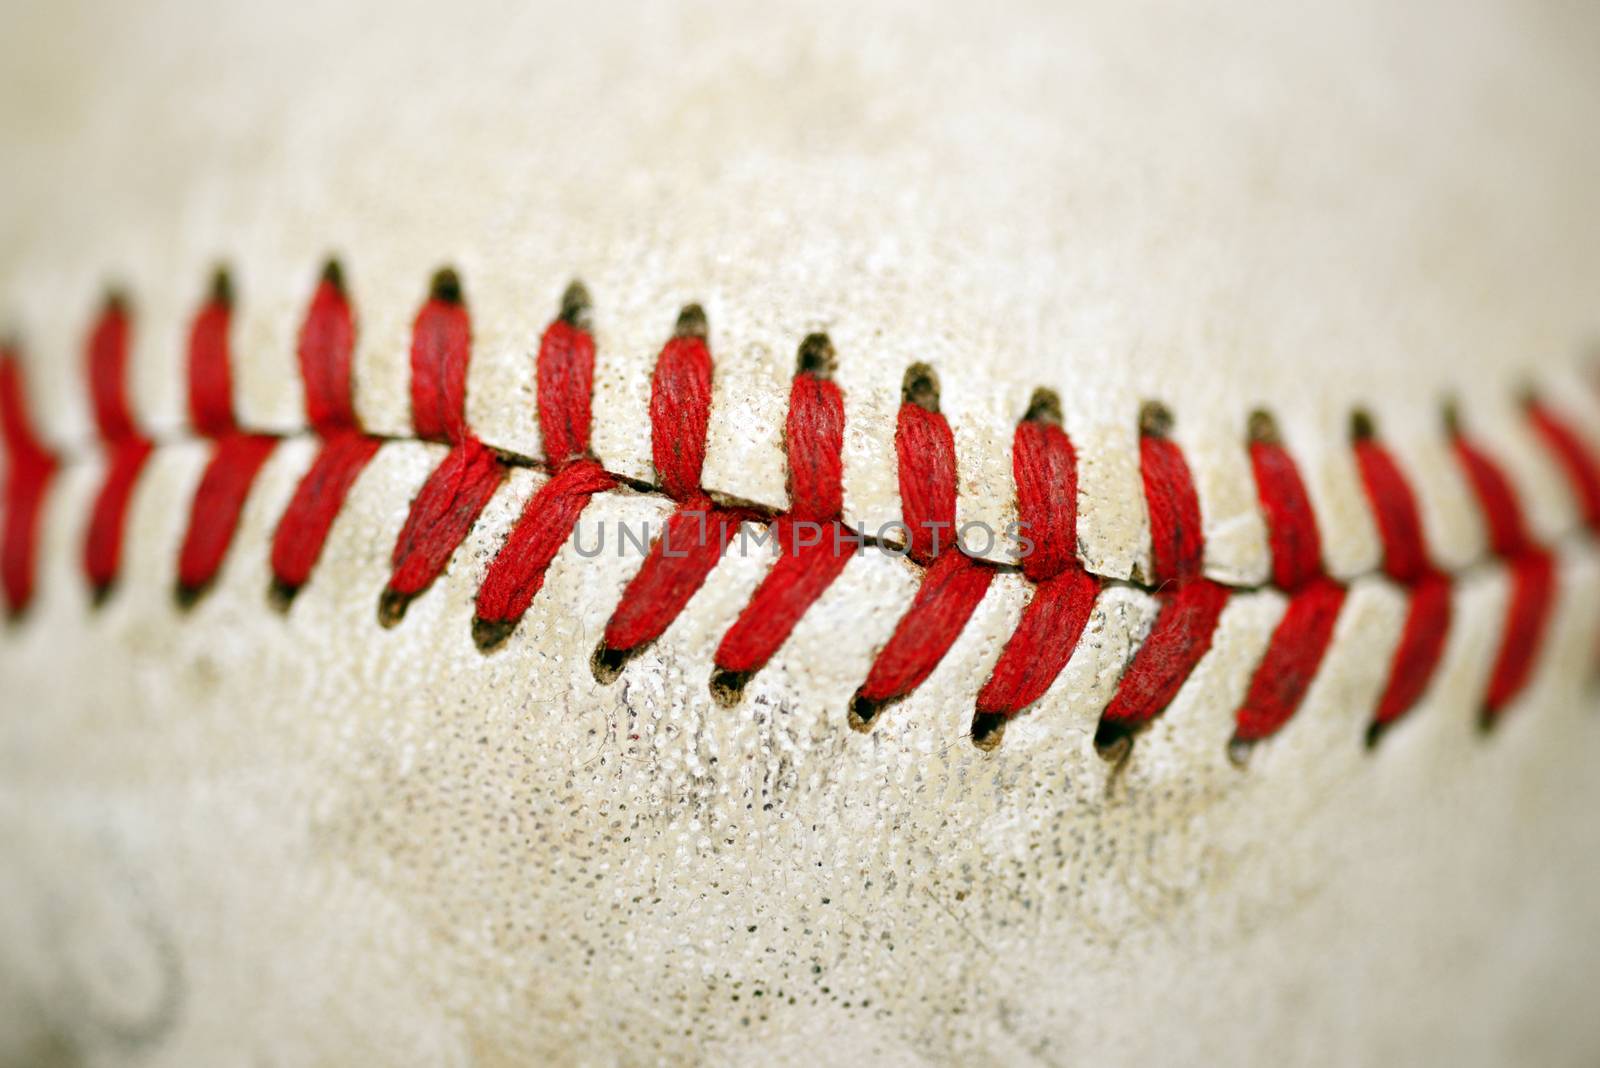 Baseball old used ball macro stitches detail